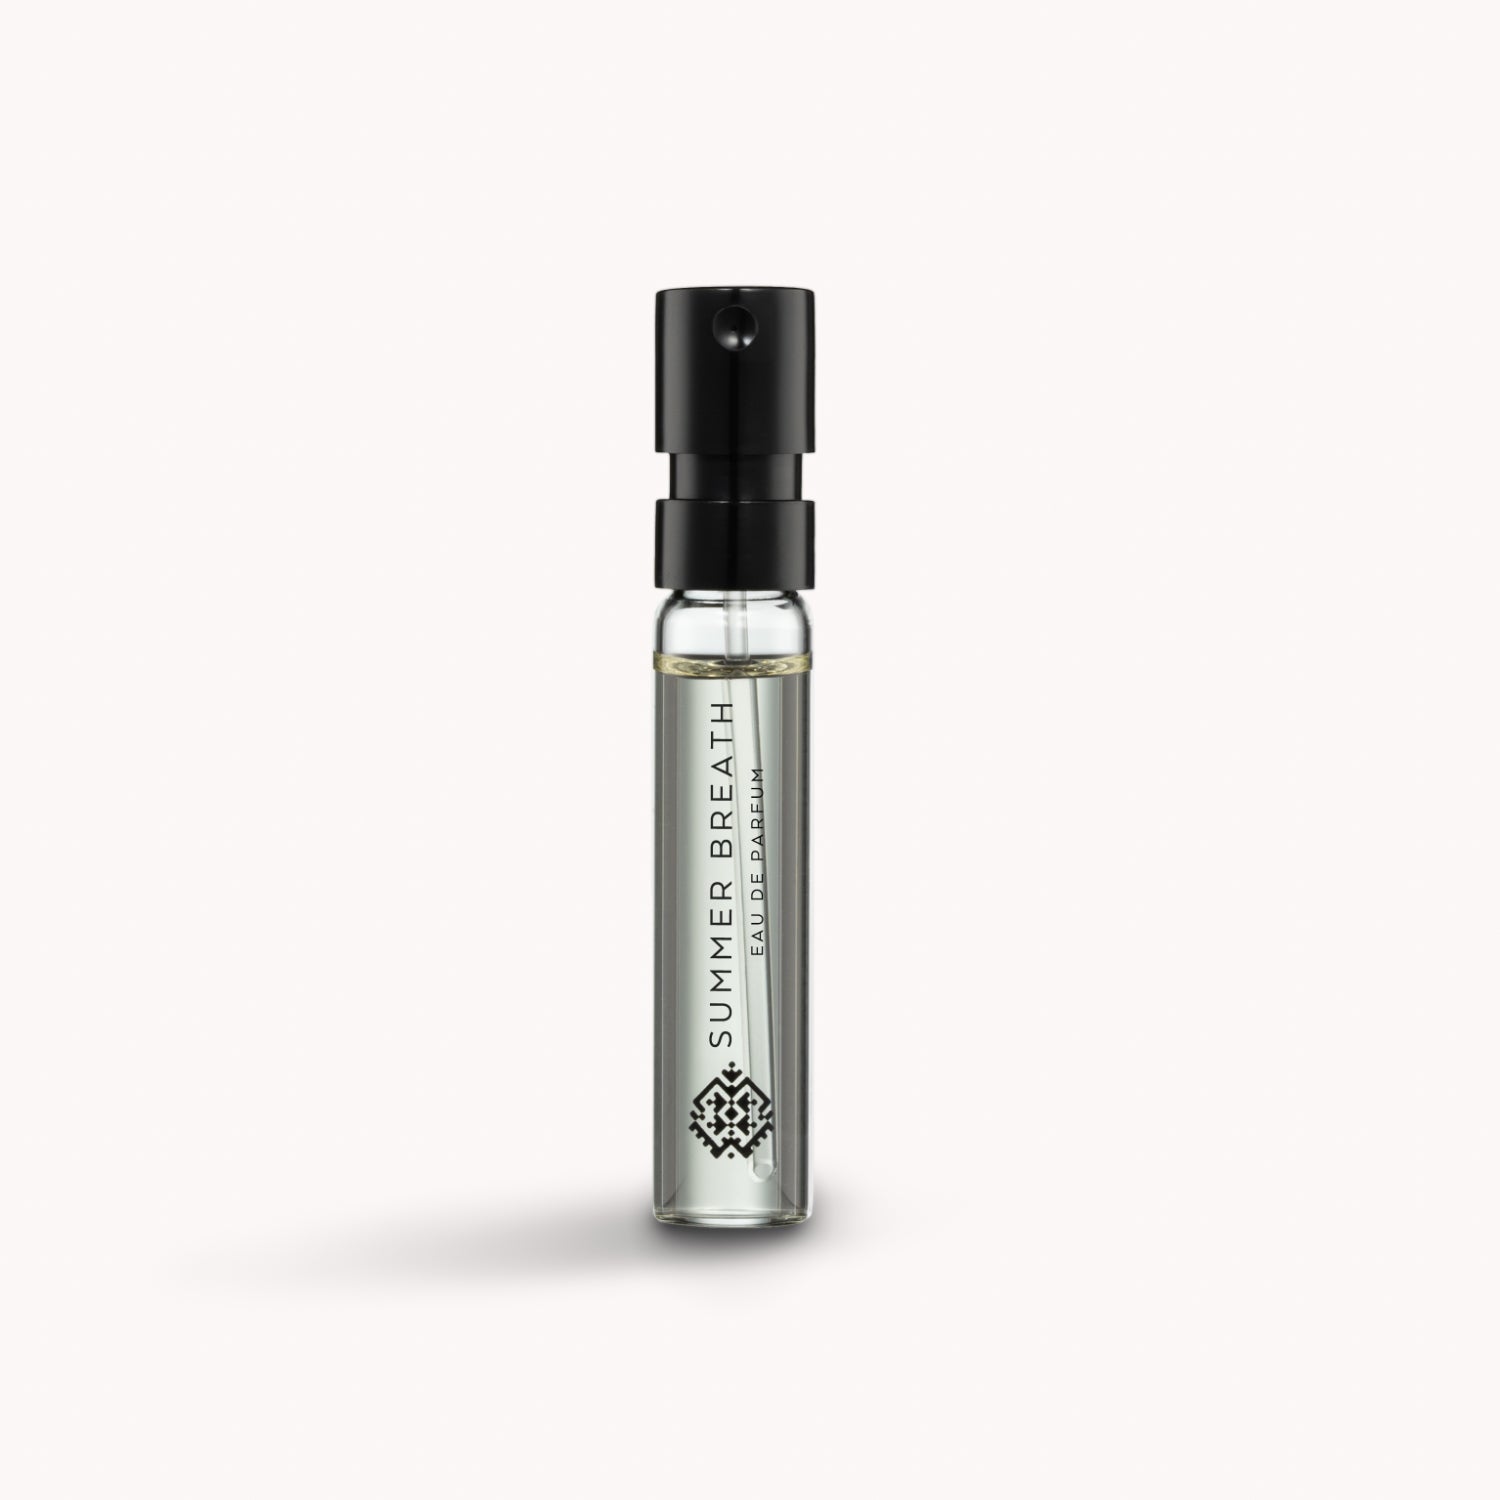 Summer Breath Sample - Eau De Parfum 2ml - Luxury Unisex Perfume for Men and Women